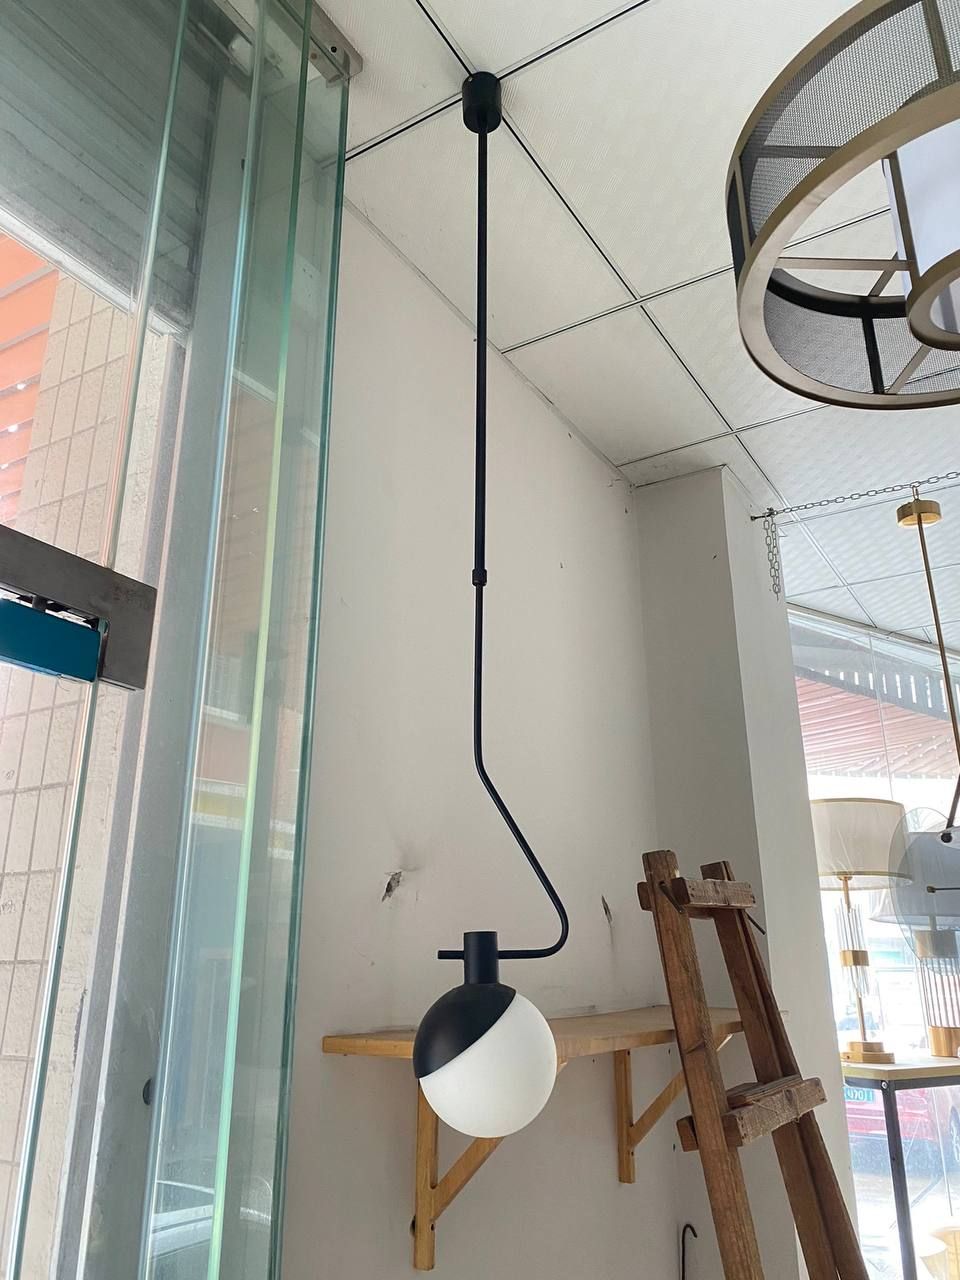 Hanging lamp ROY by Romatti